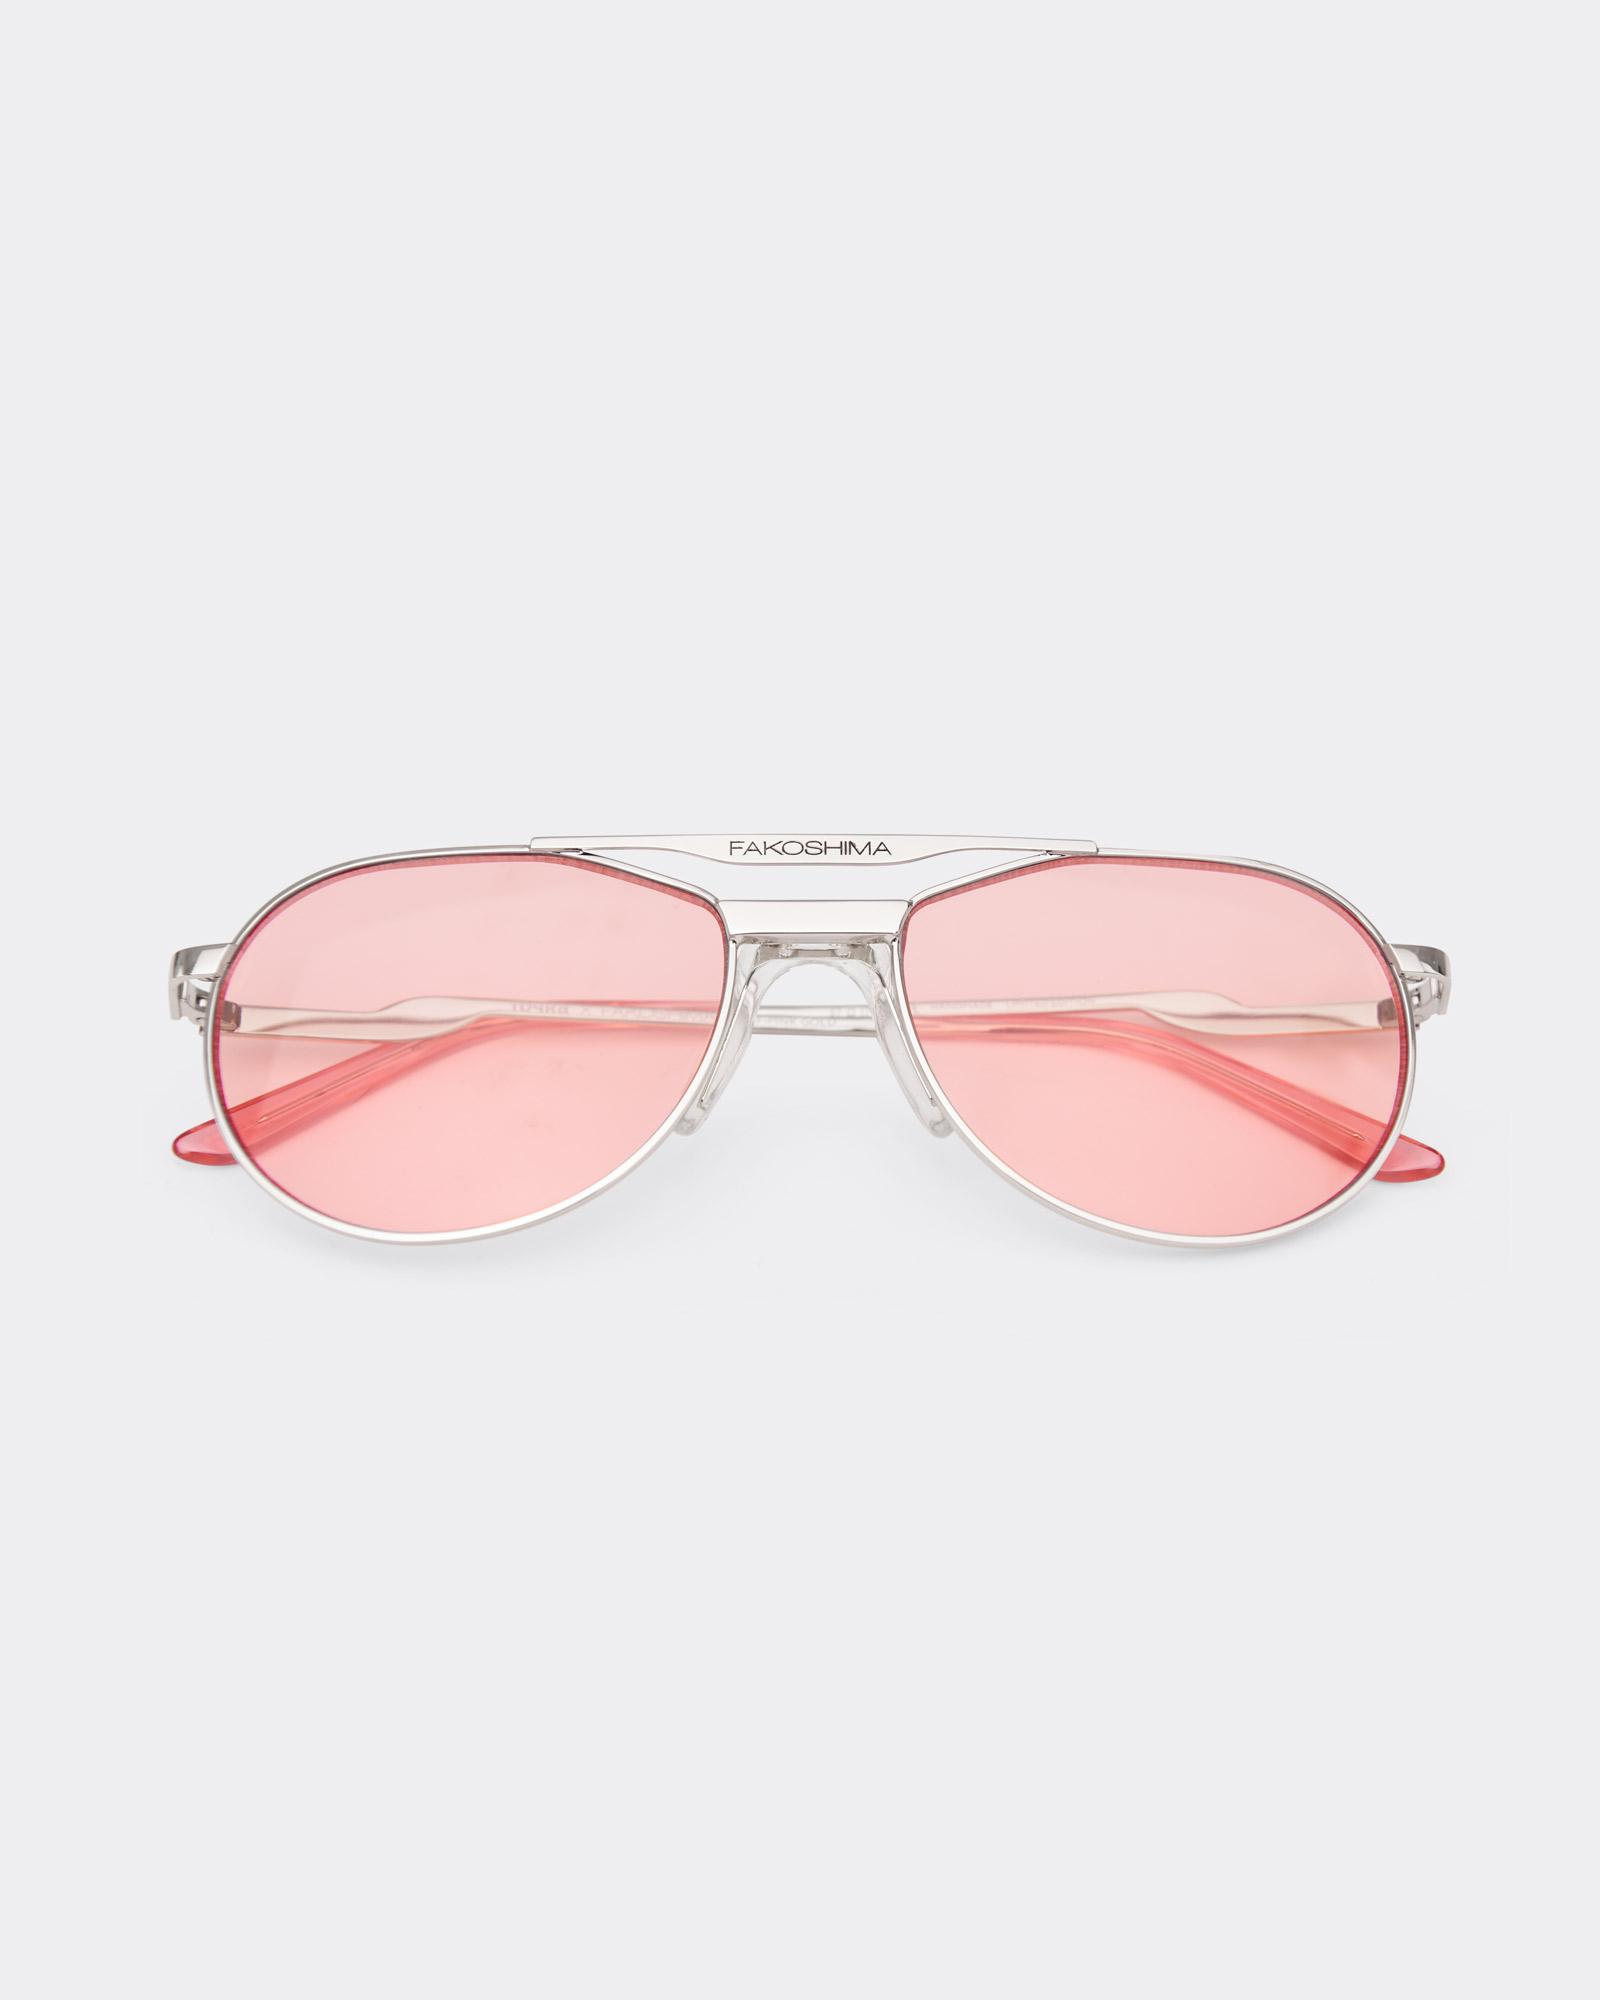 Розовые очки – Точка х Fakoshima, серебряная оправа